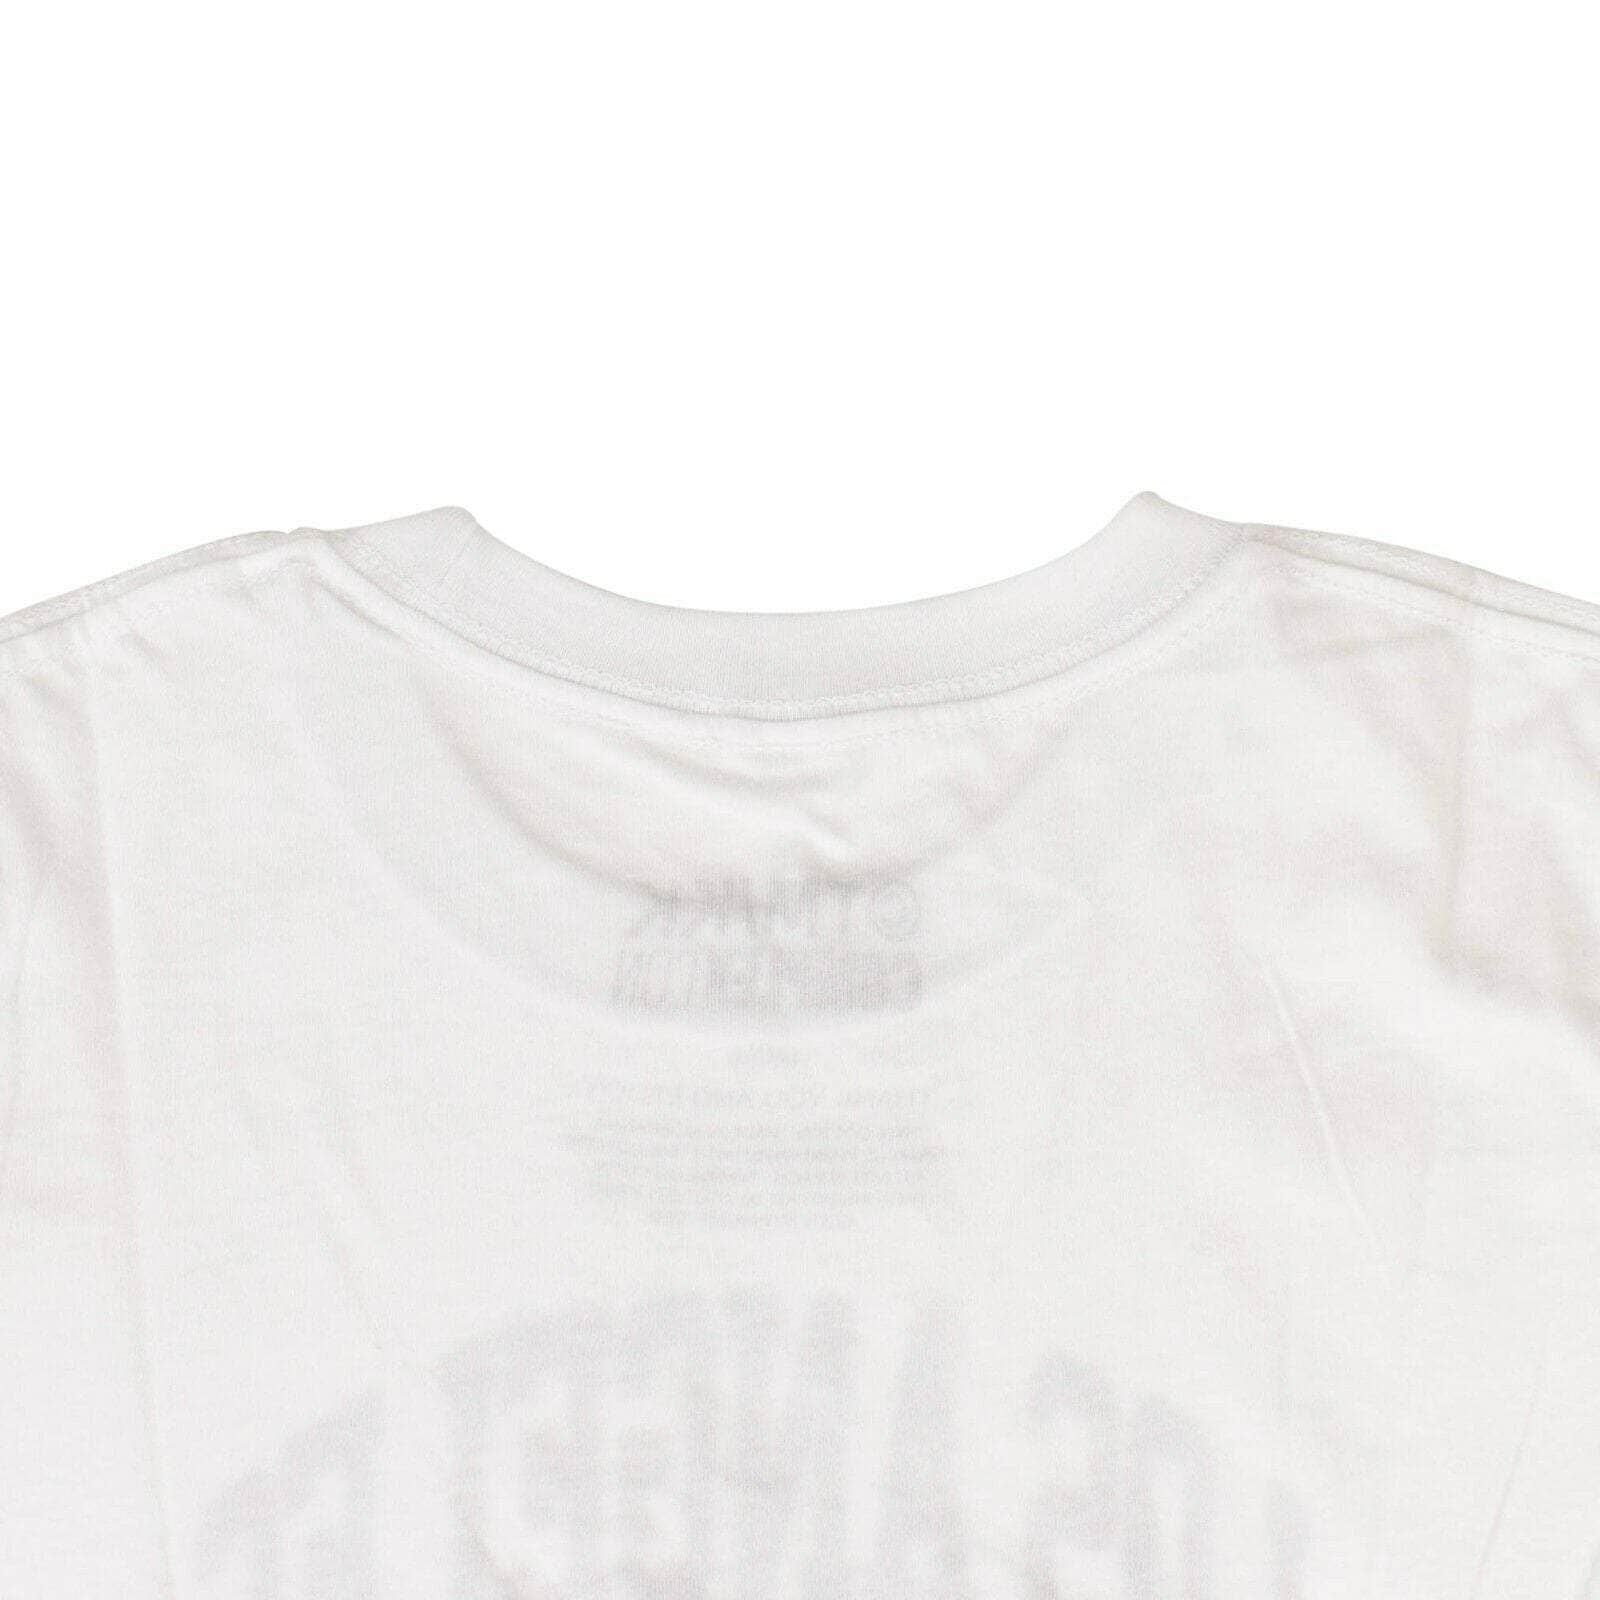 Takashi Murakami Arch White T-Shirt